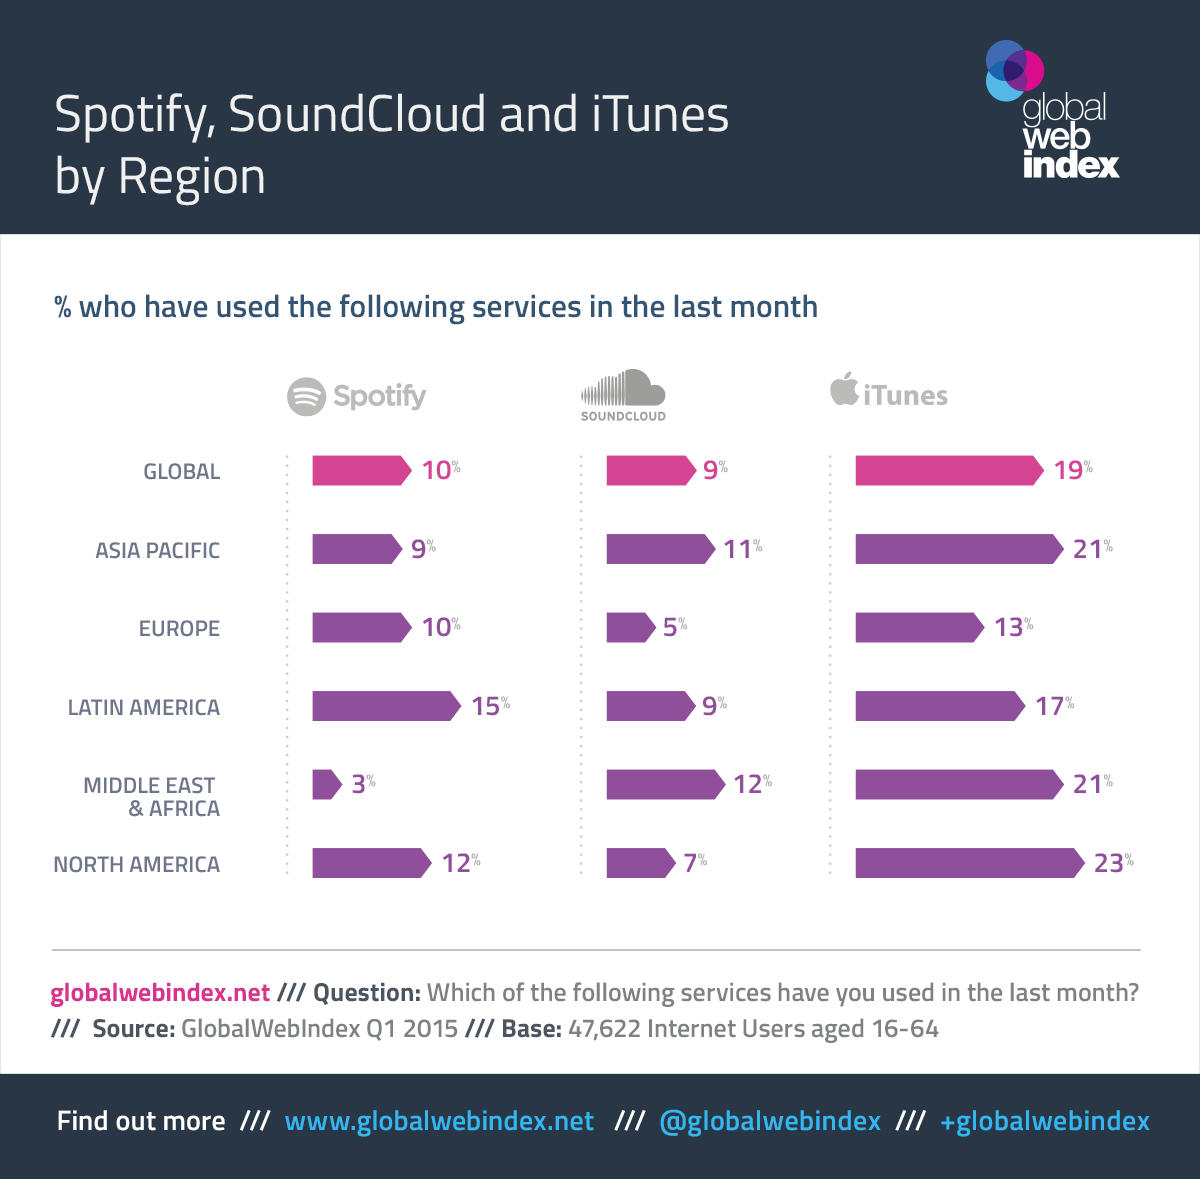 apple music vs spotify sound quality